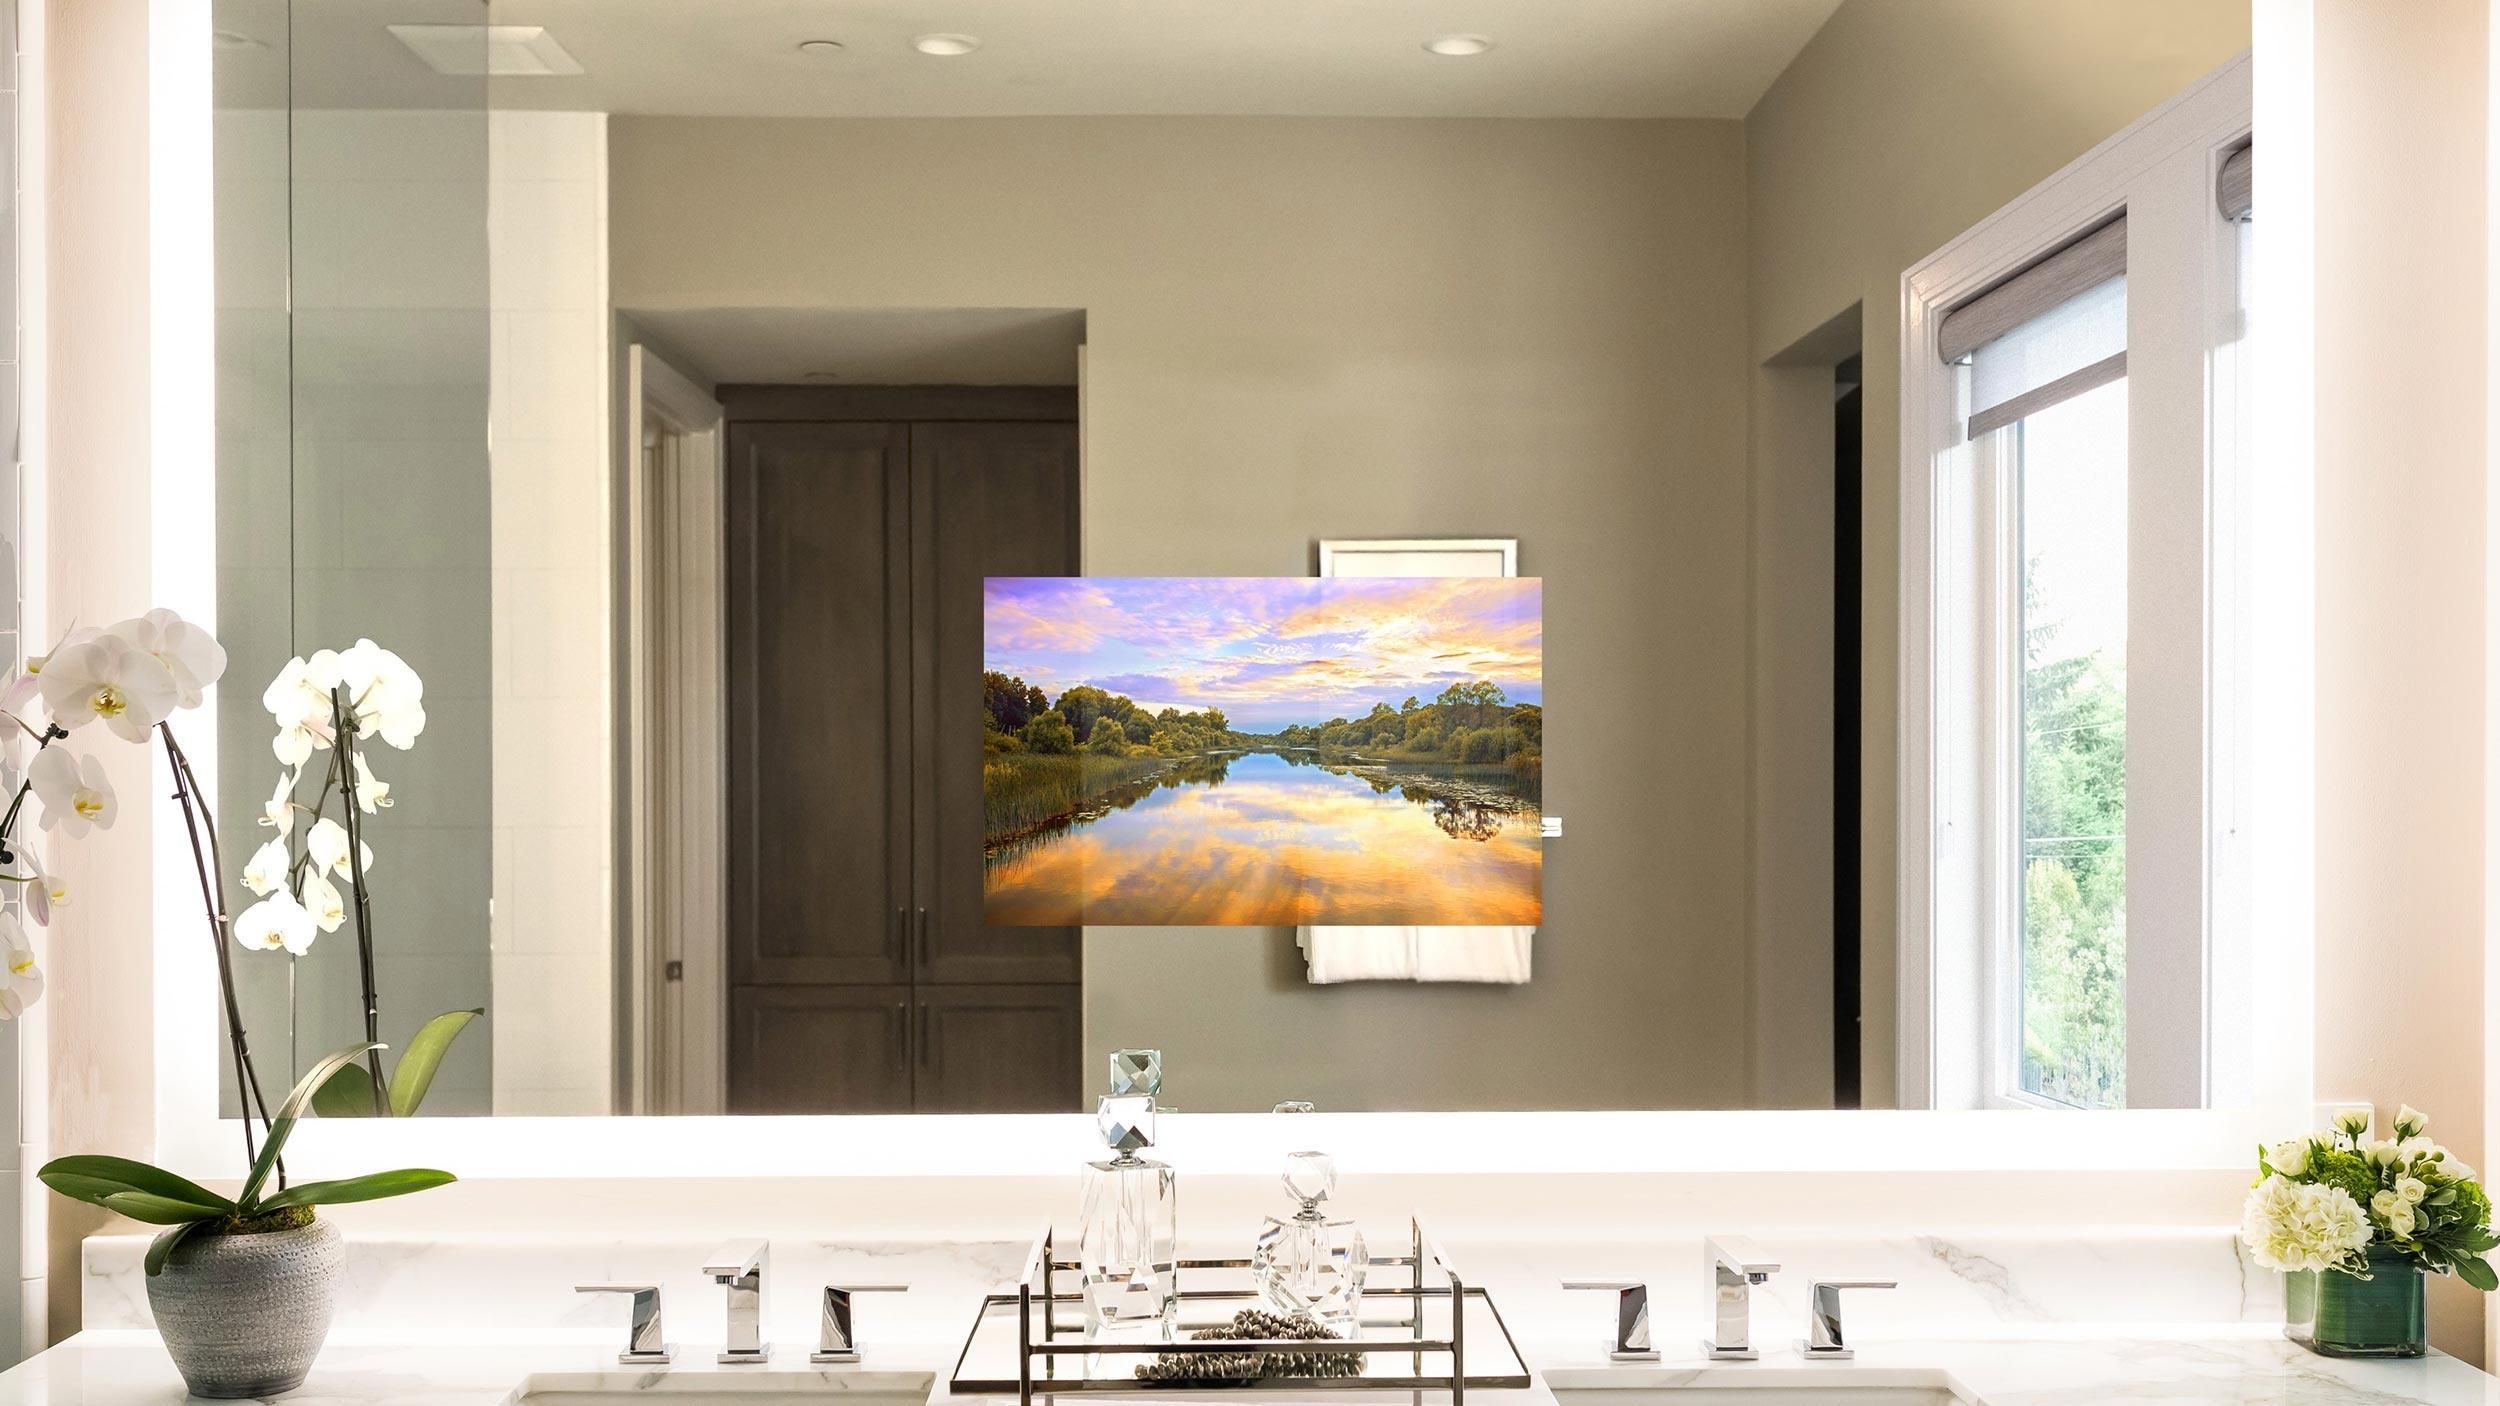 Seura Vanishing Vanity TV Mirrors in a white bathroom